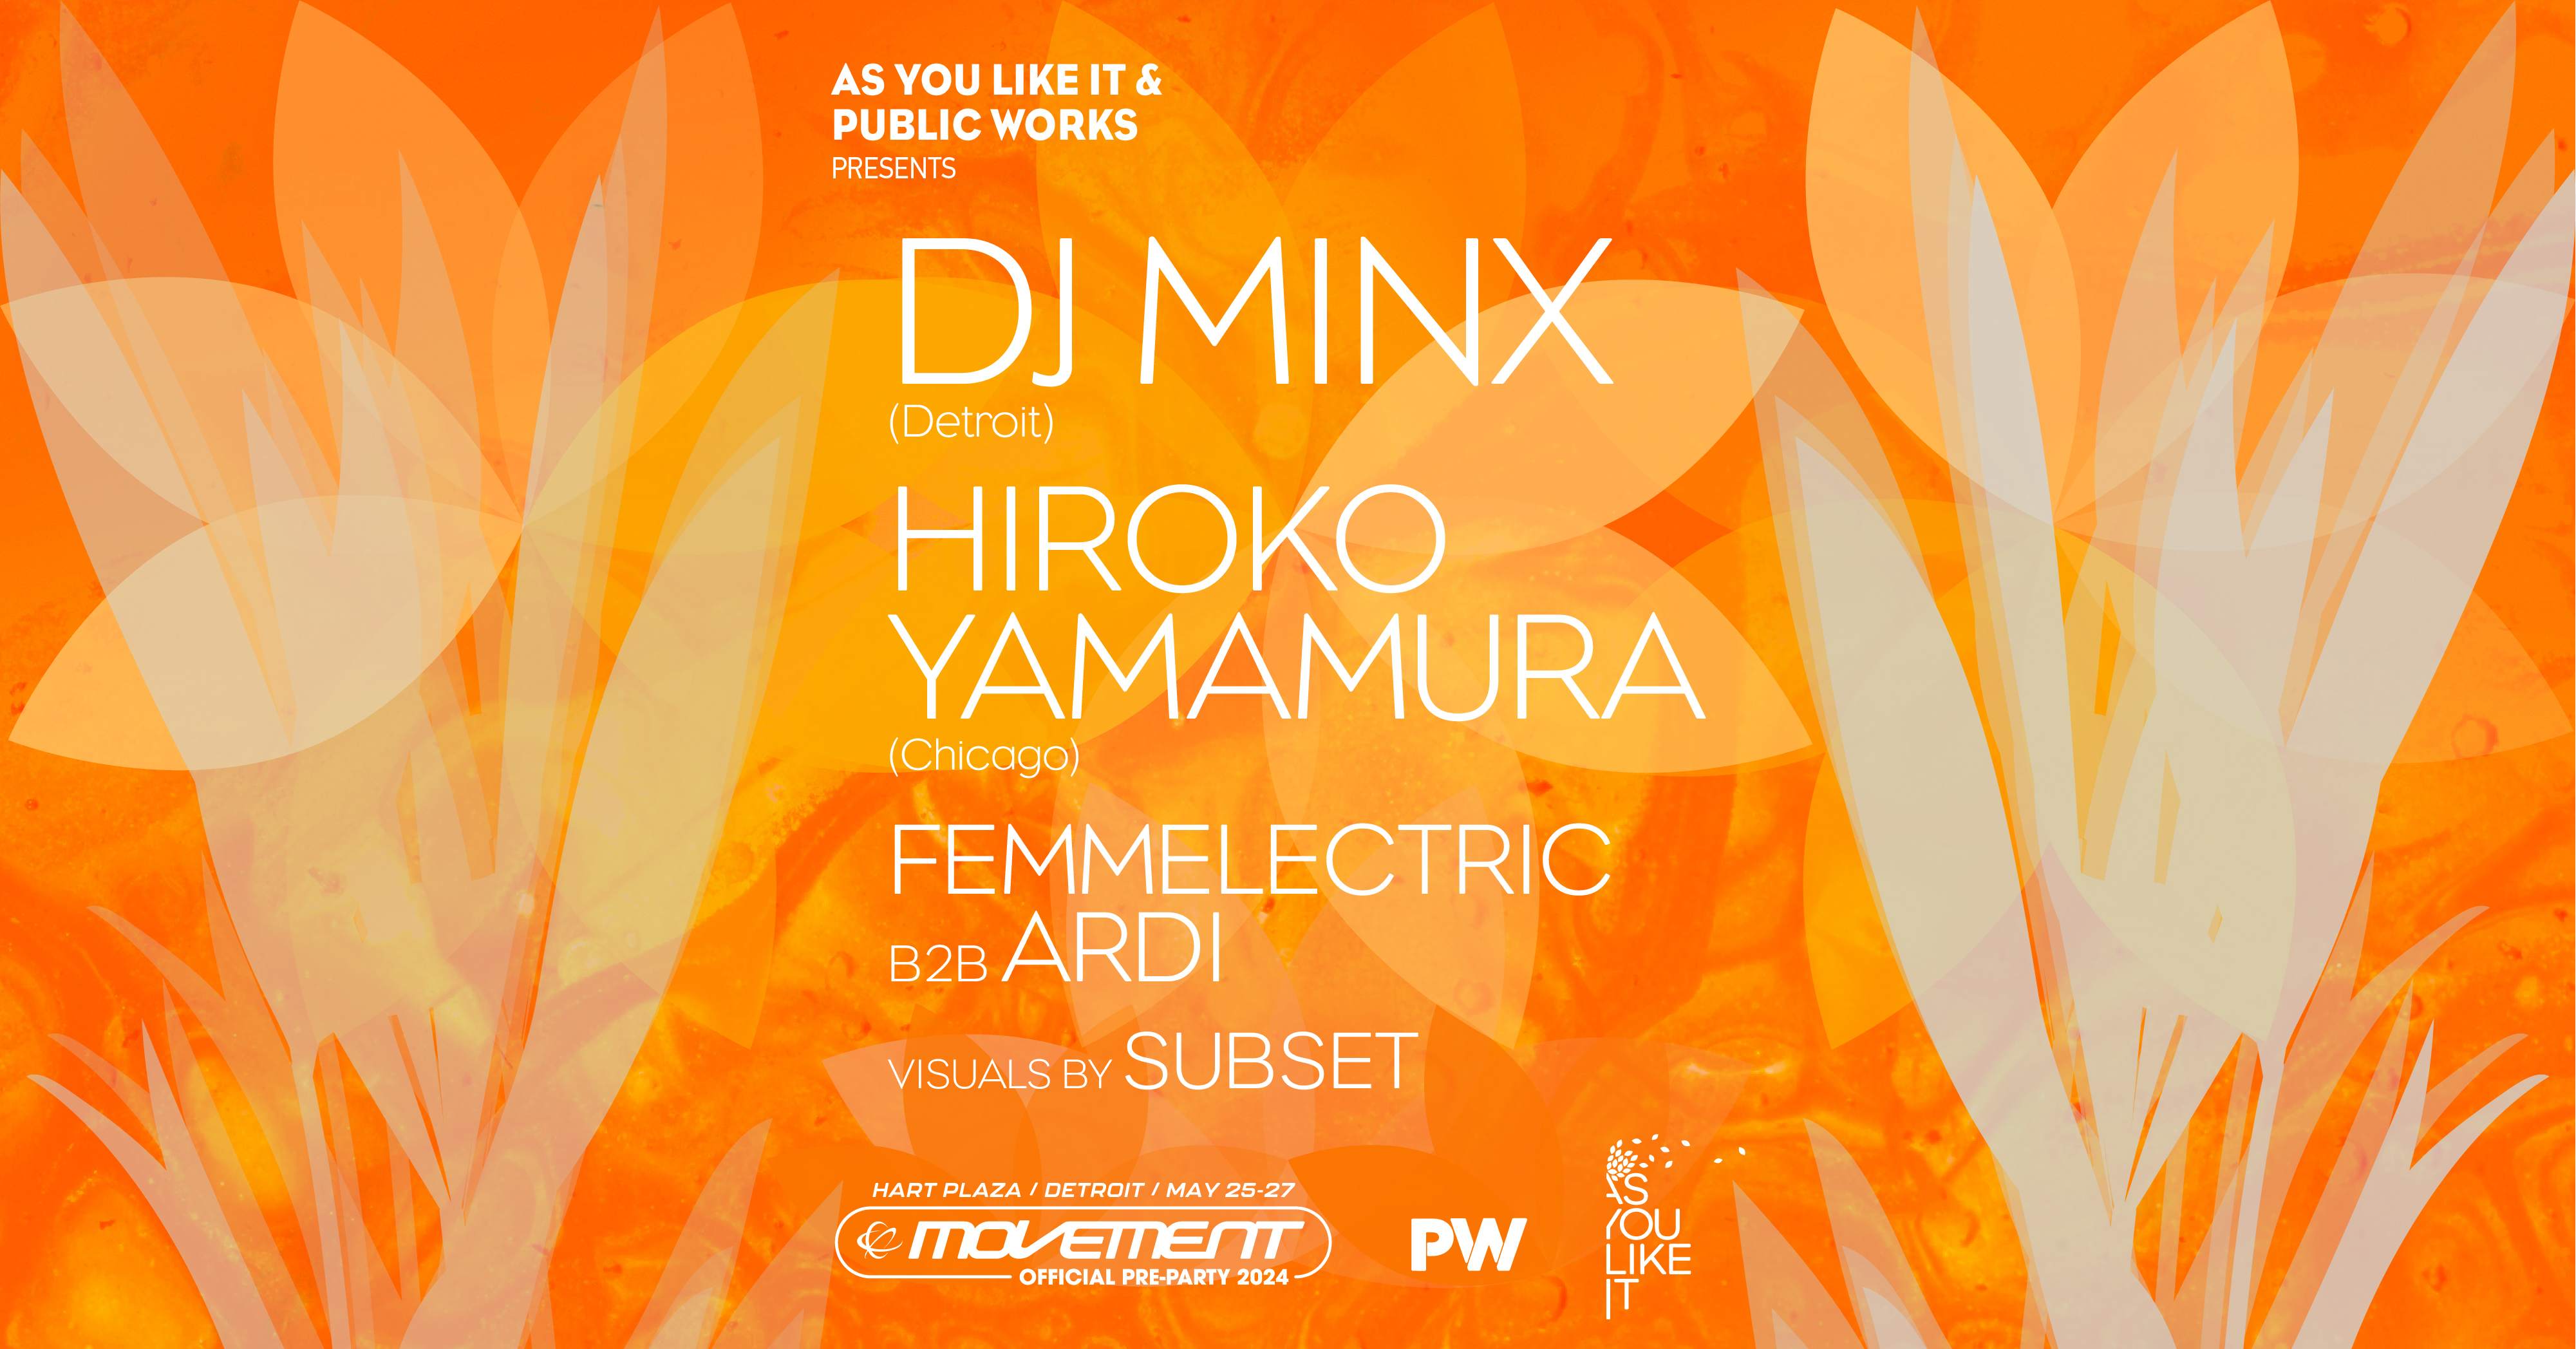 AYLI & PW present DJ Minx & Hiroko Yamamura (Movement Pre-Party) - フライヤー表